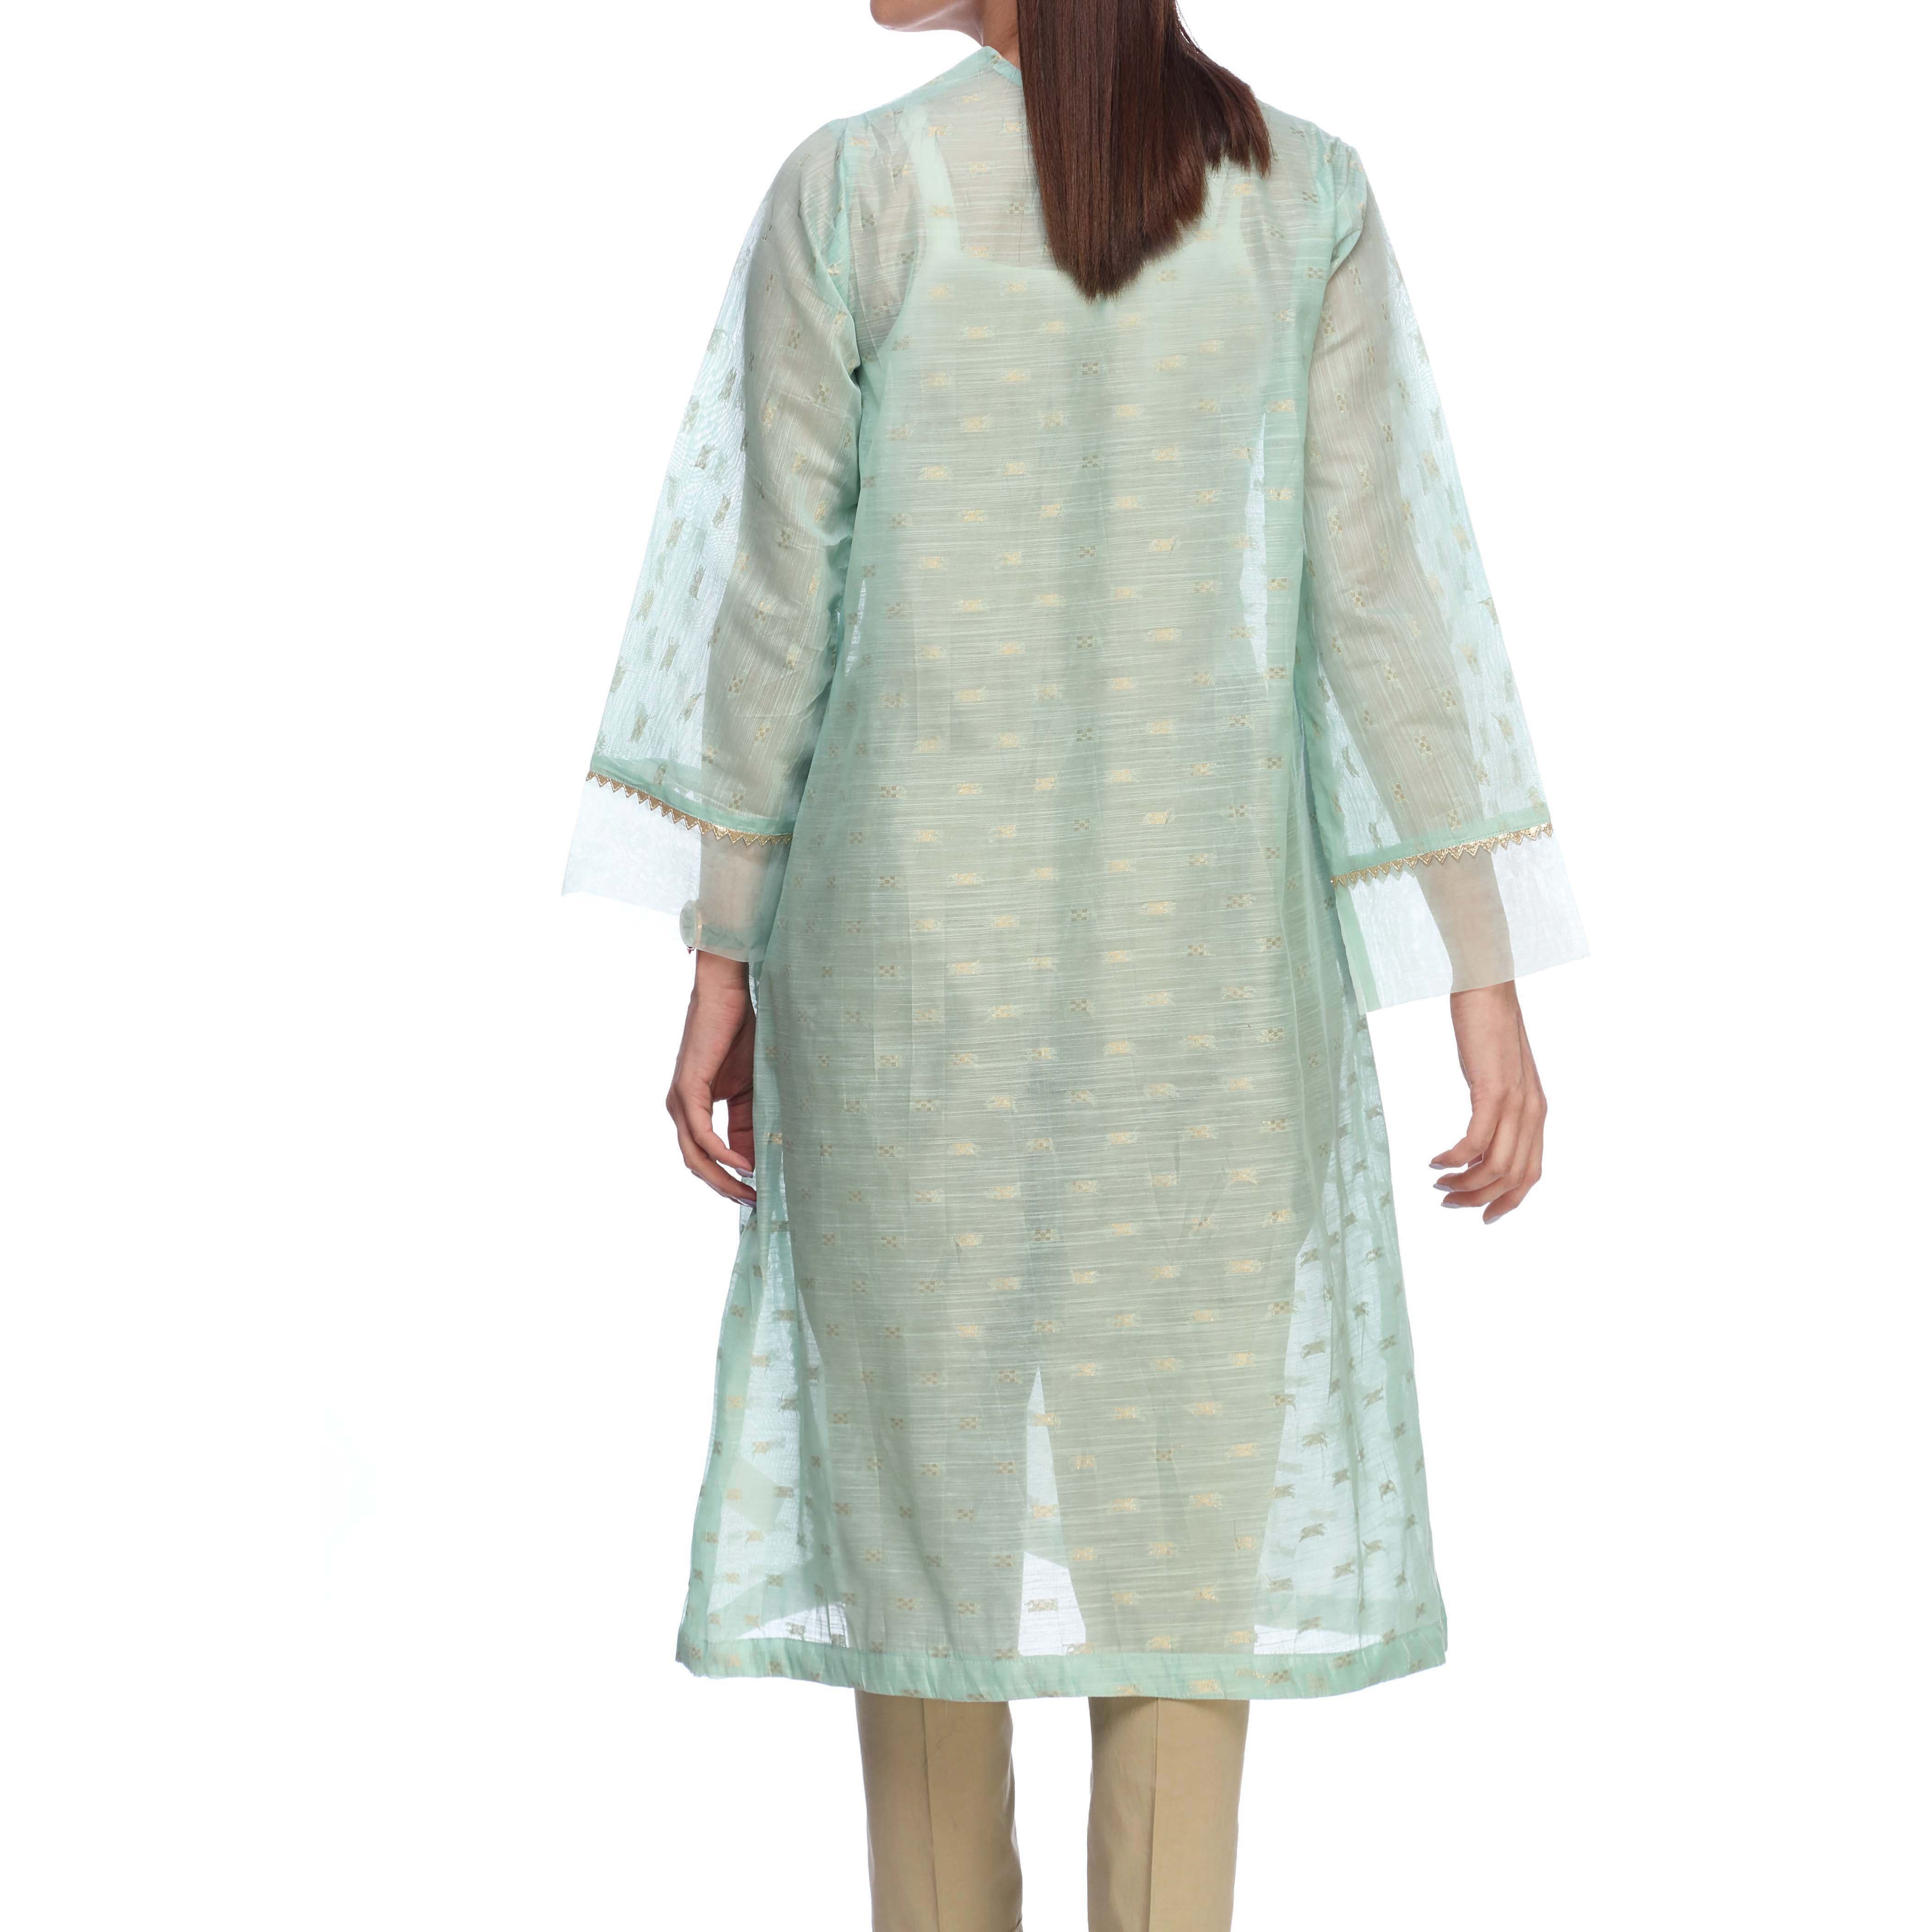 Seagreen Color Embellished Cotton Zari Shirt PS2245